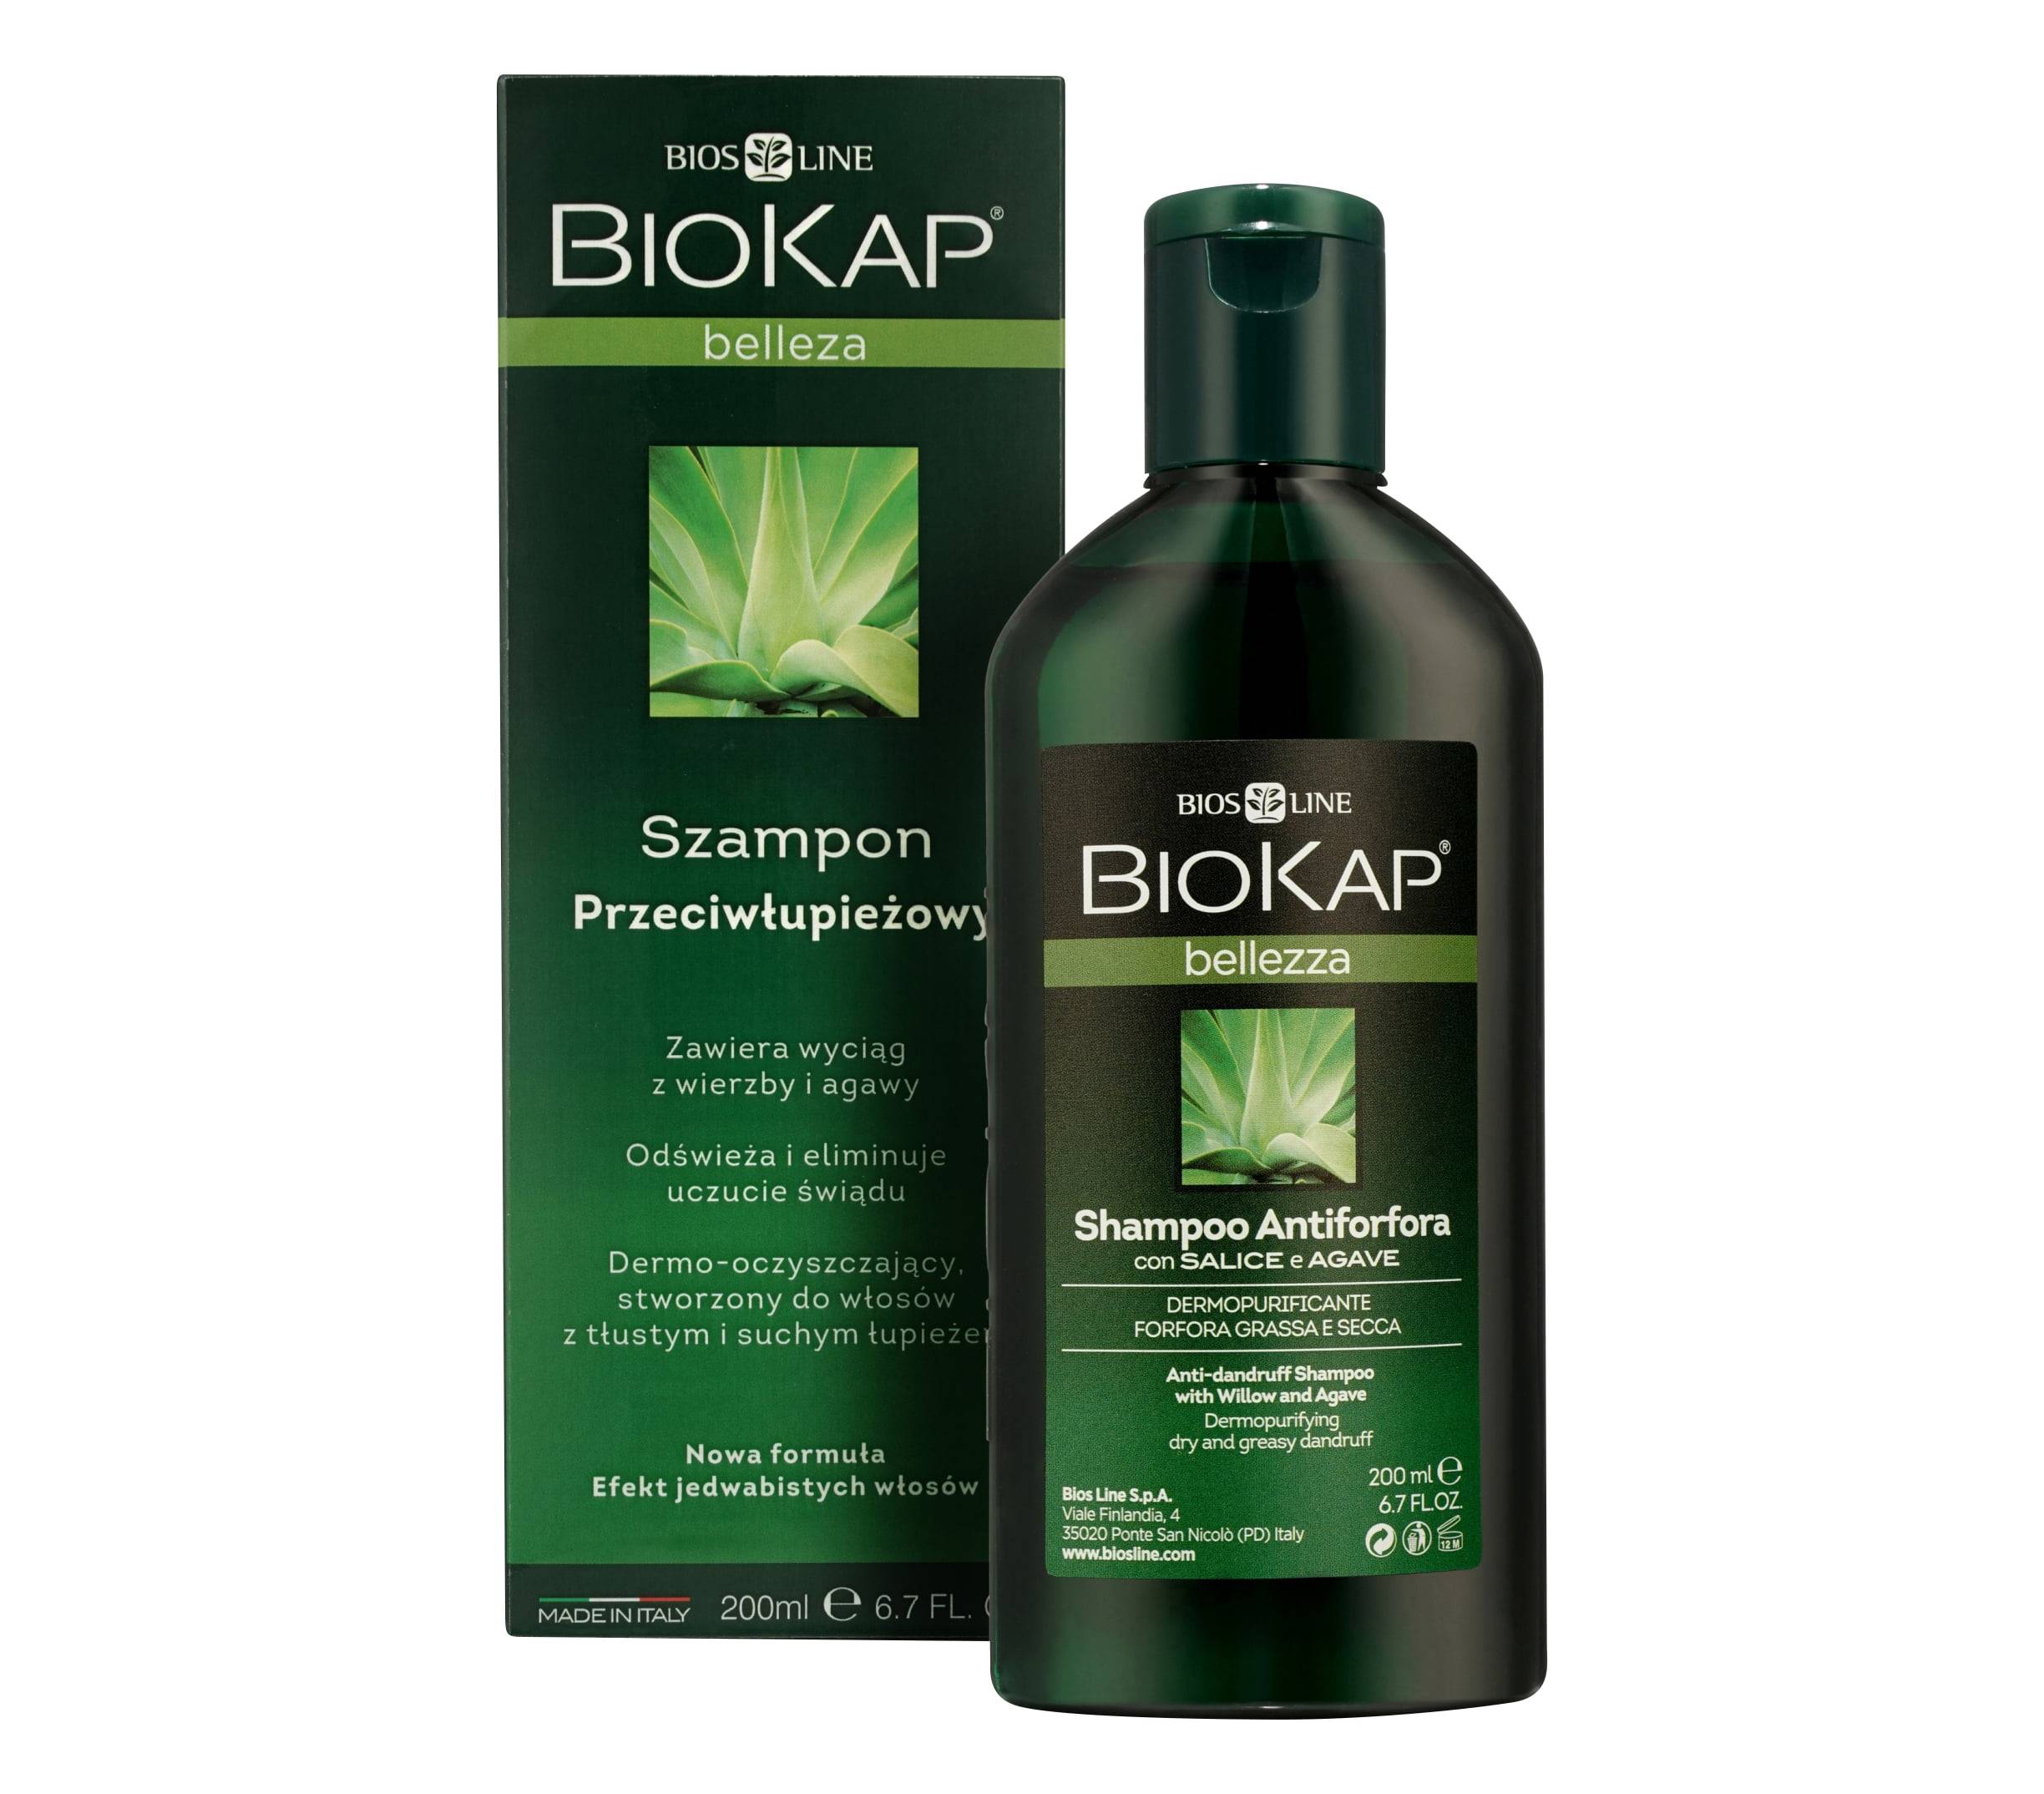 biokap szampon cena